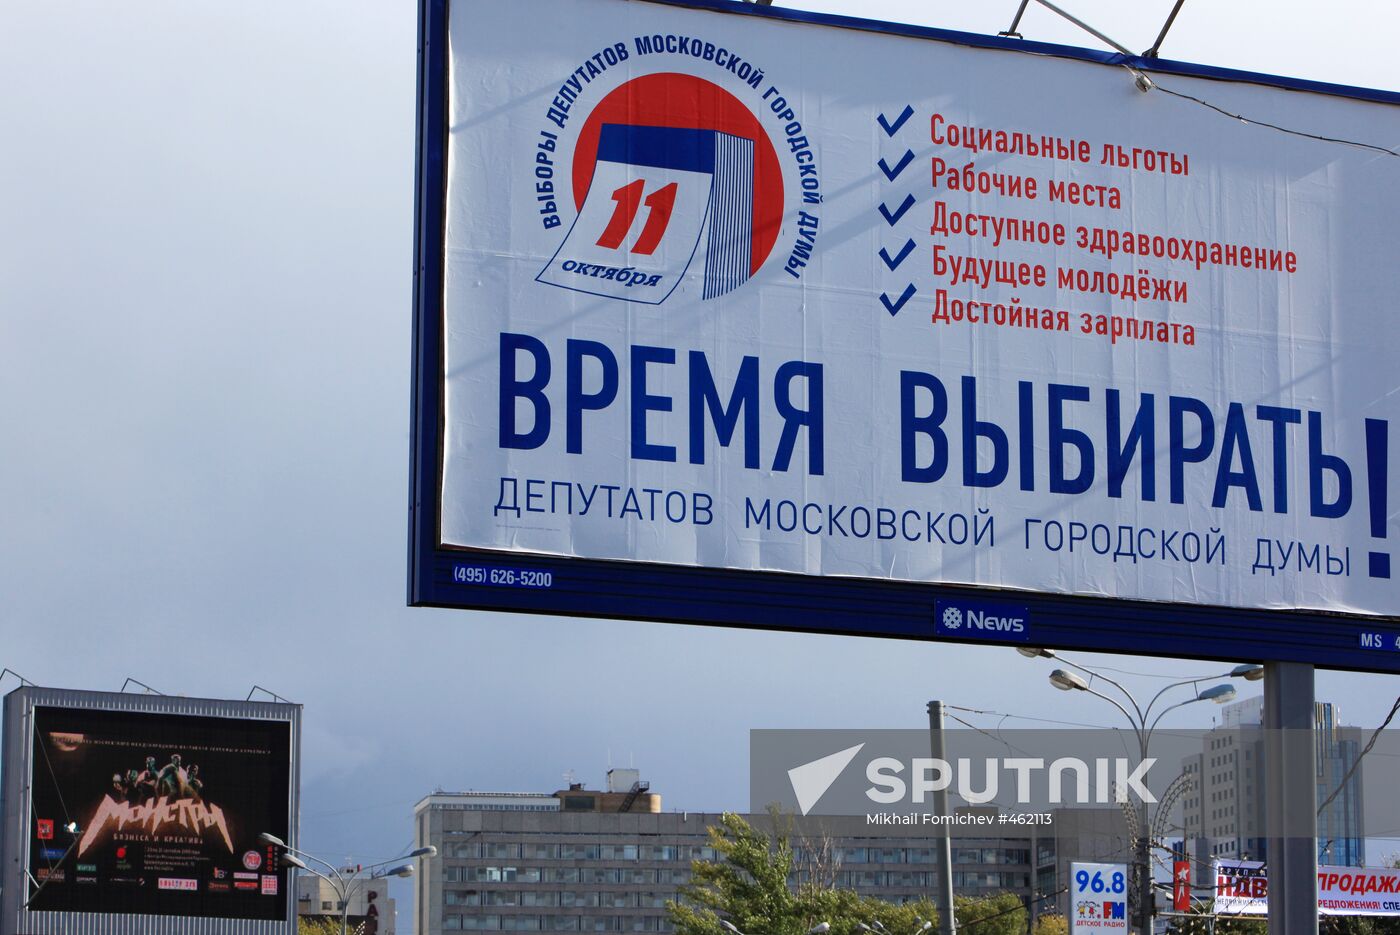 Moscow City Duma election campaign